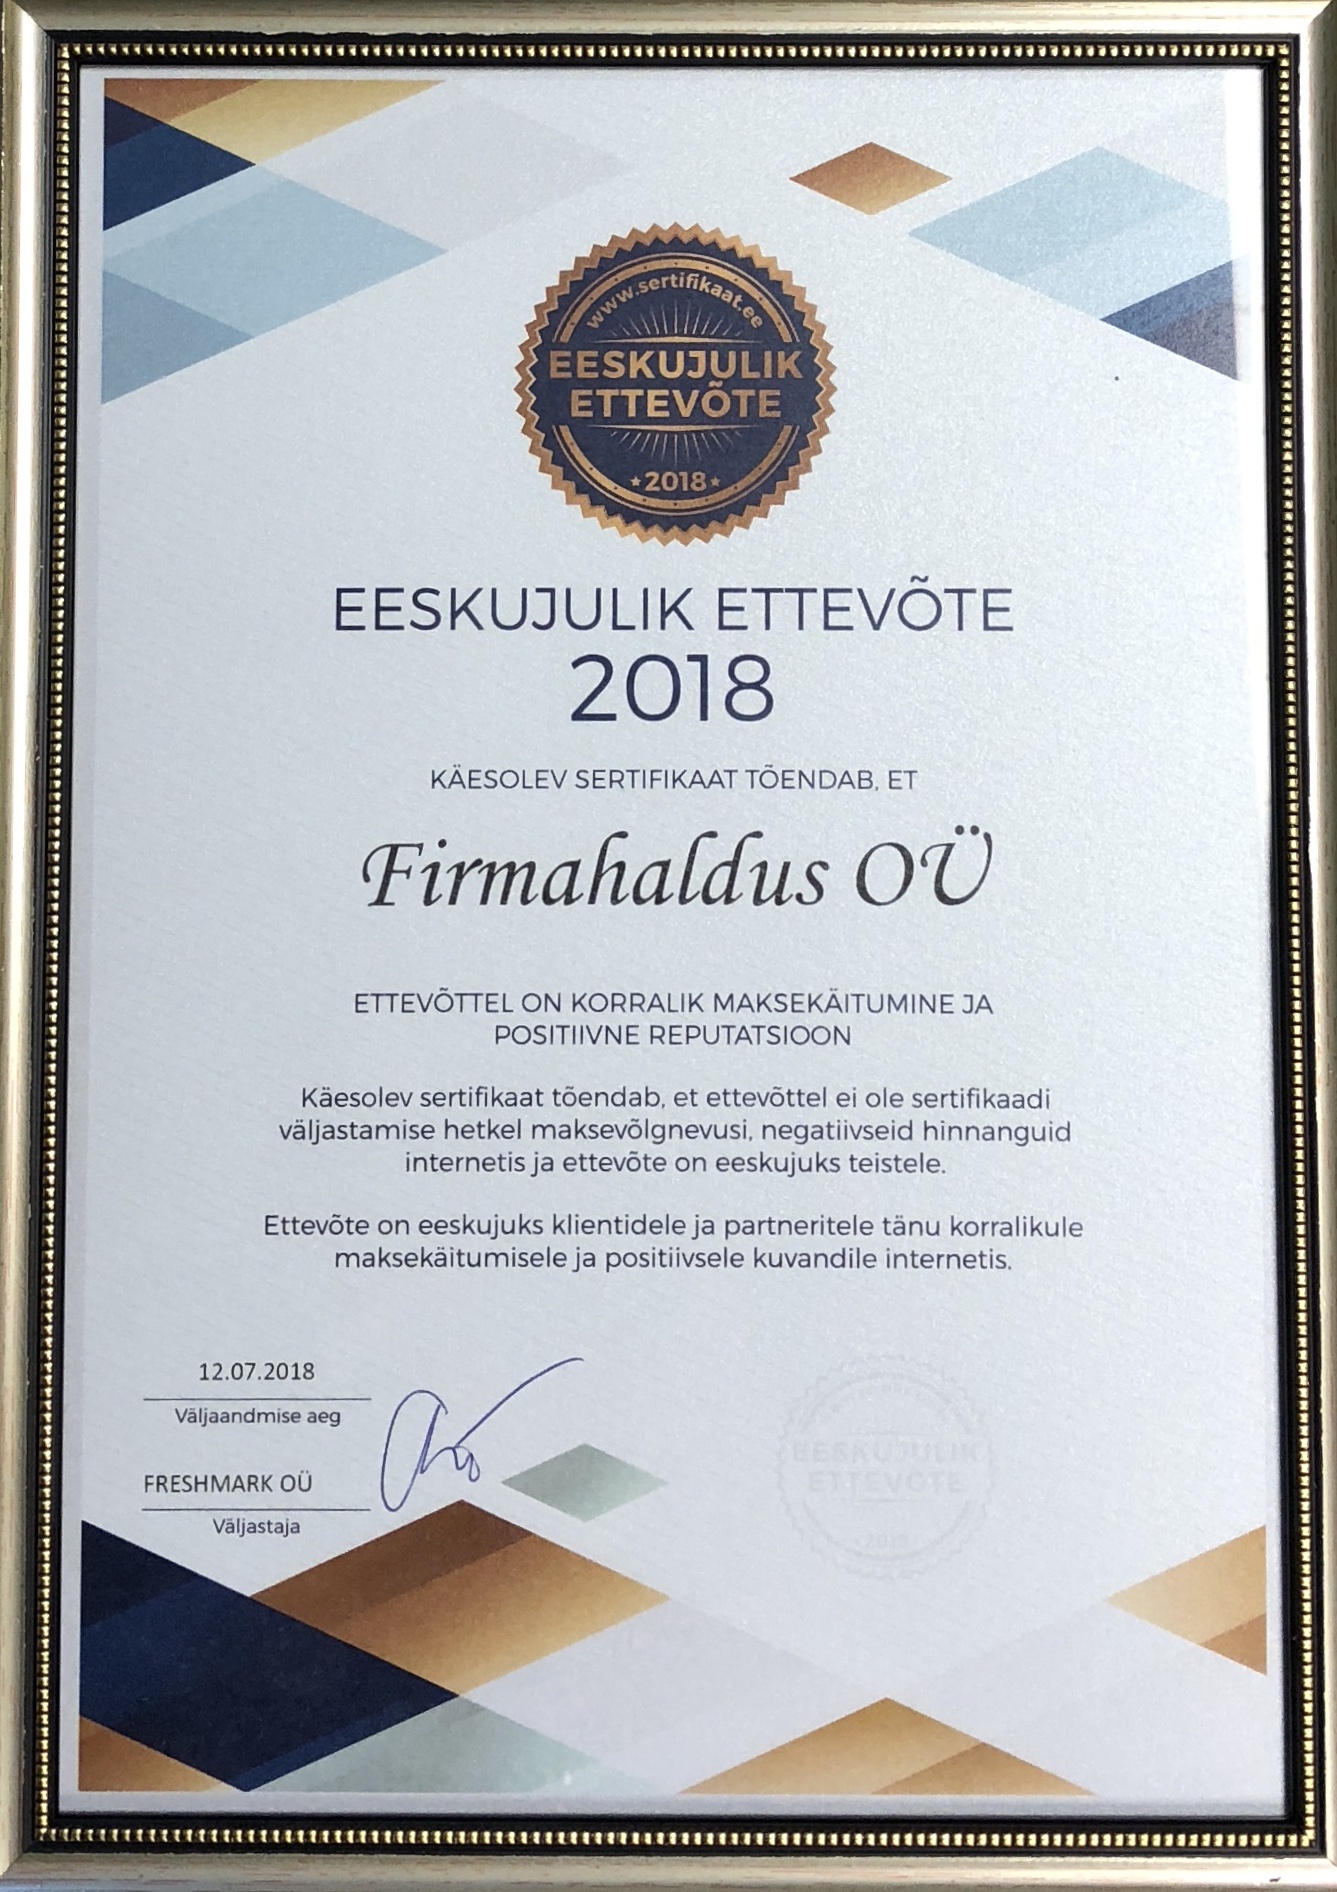 Certified accounting service provider in Estonia.